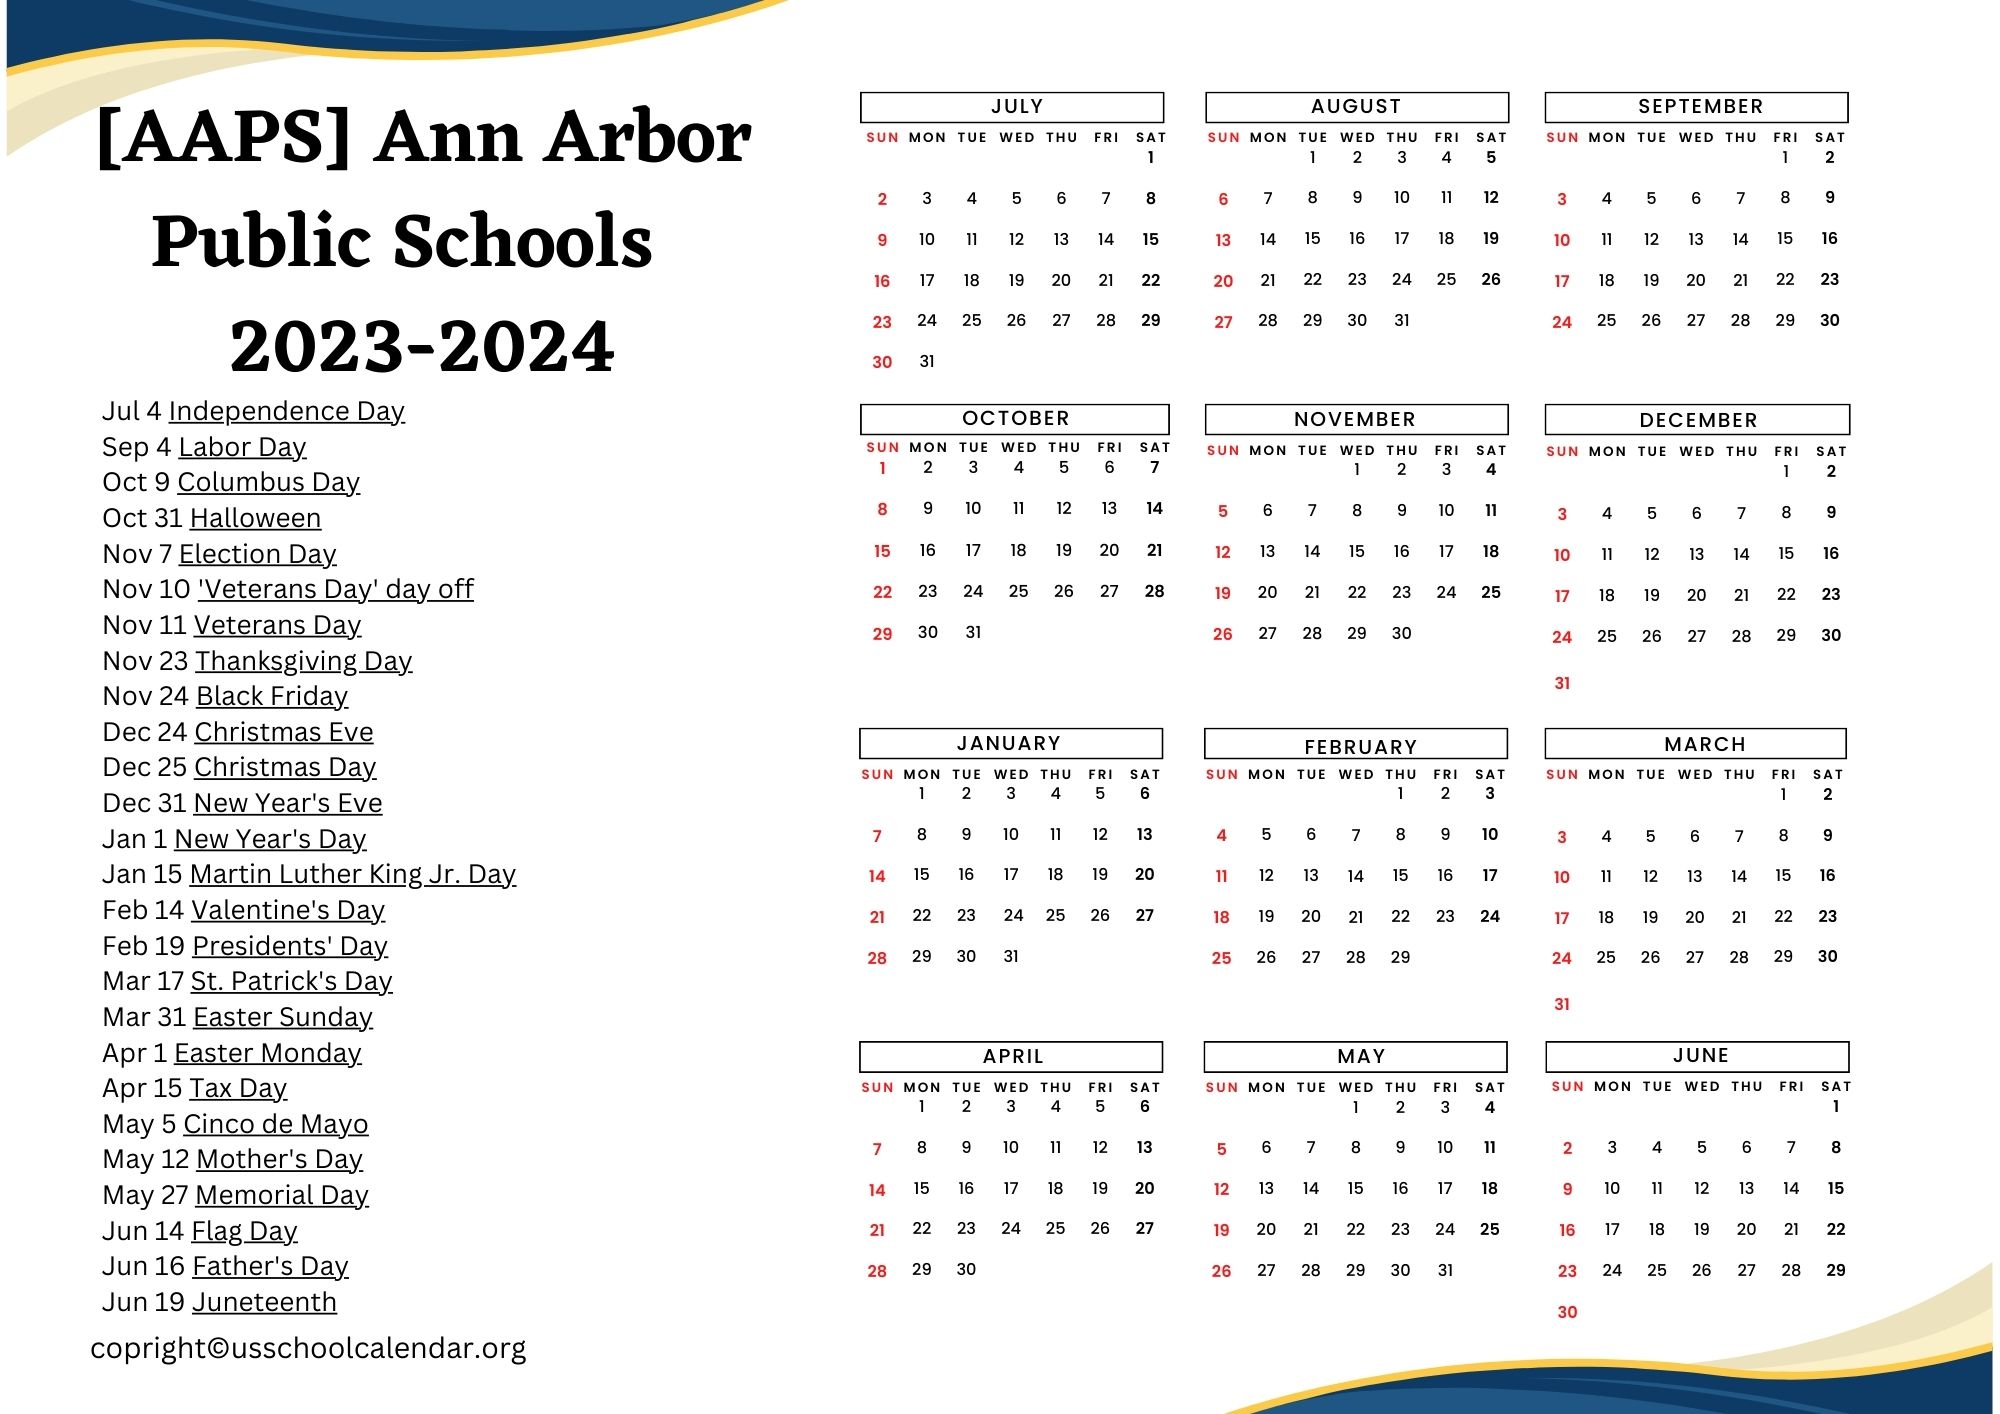 Ann Arbor Public Schools Calendar Holidays 20232024 [AAPS]